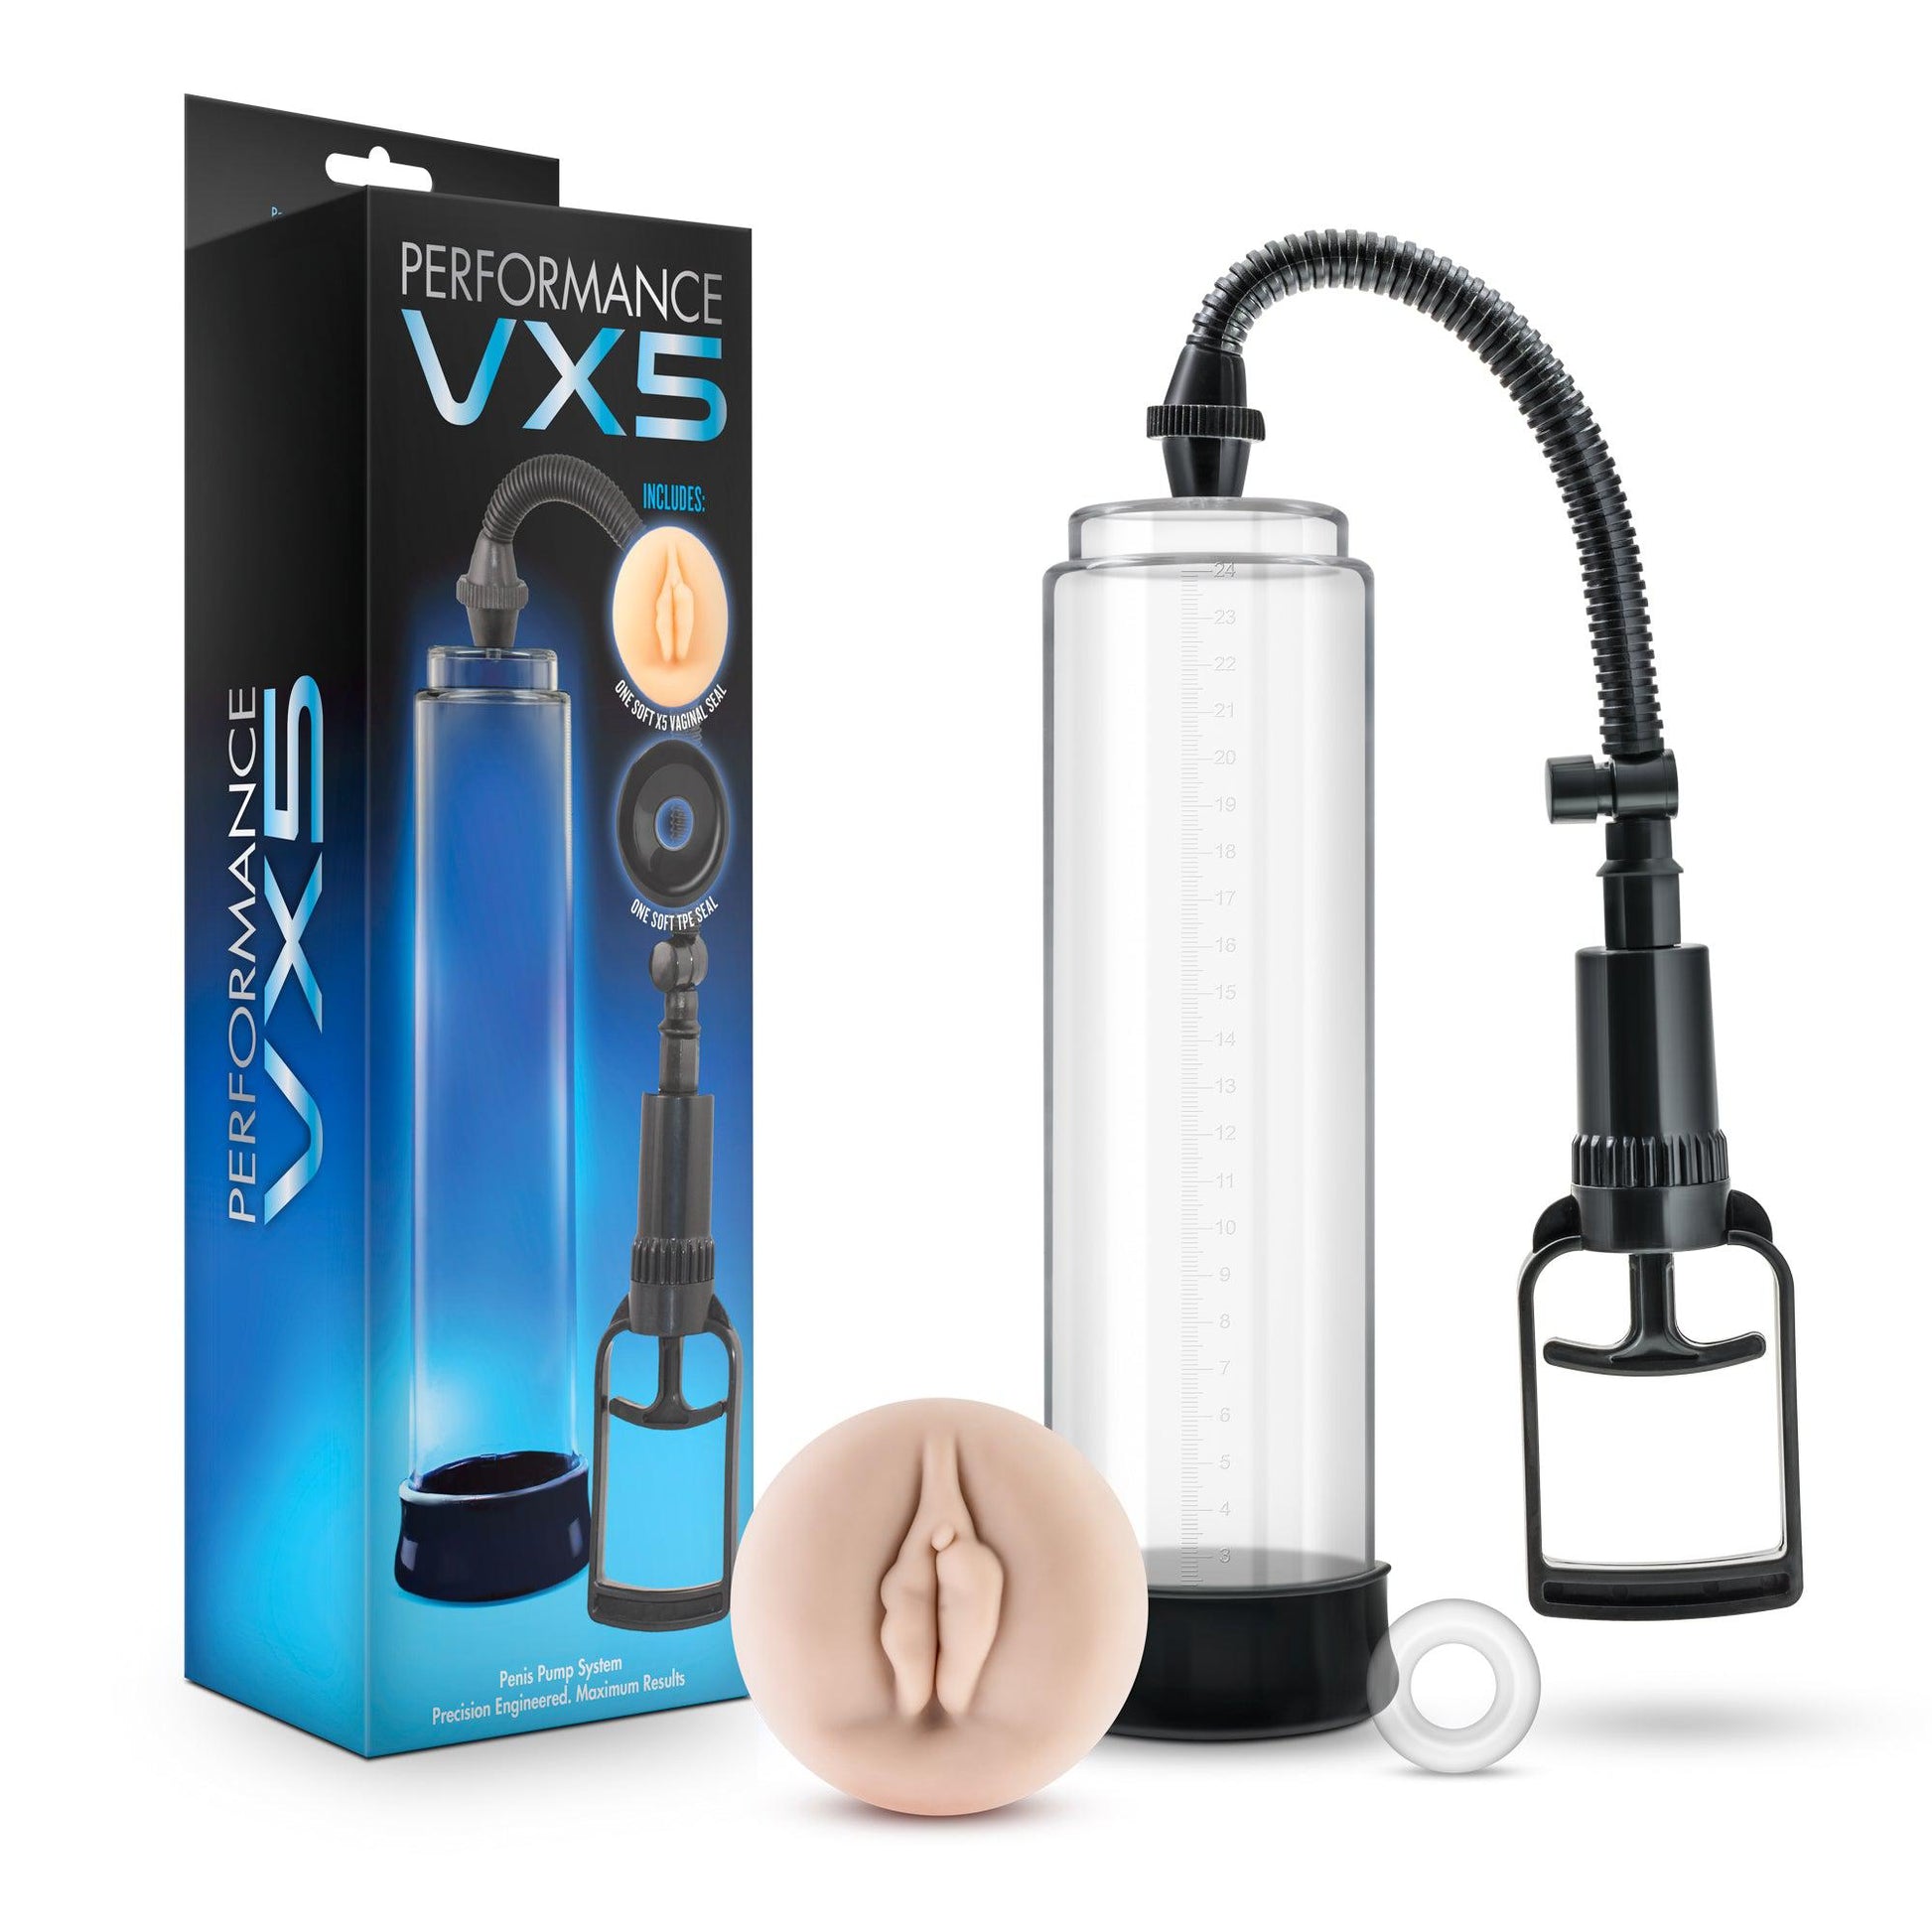 Performance - Vx5 Male Enhancement Pump System - Clear